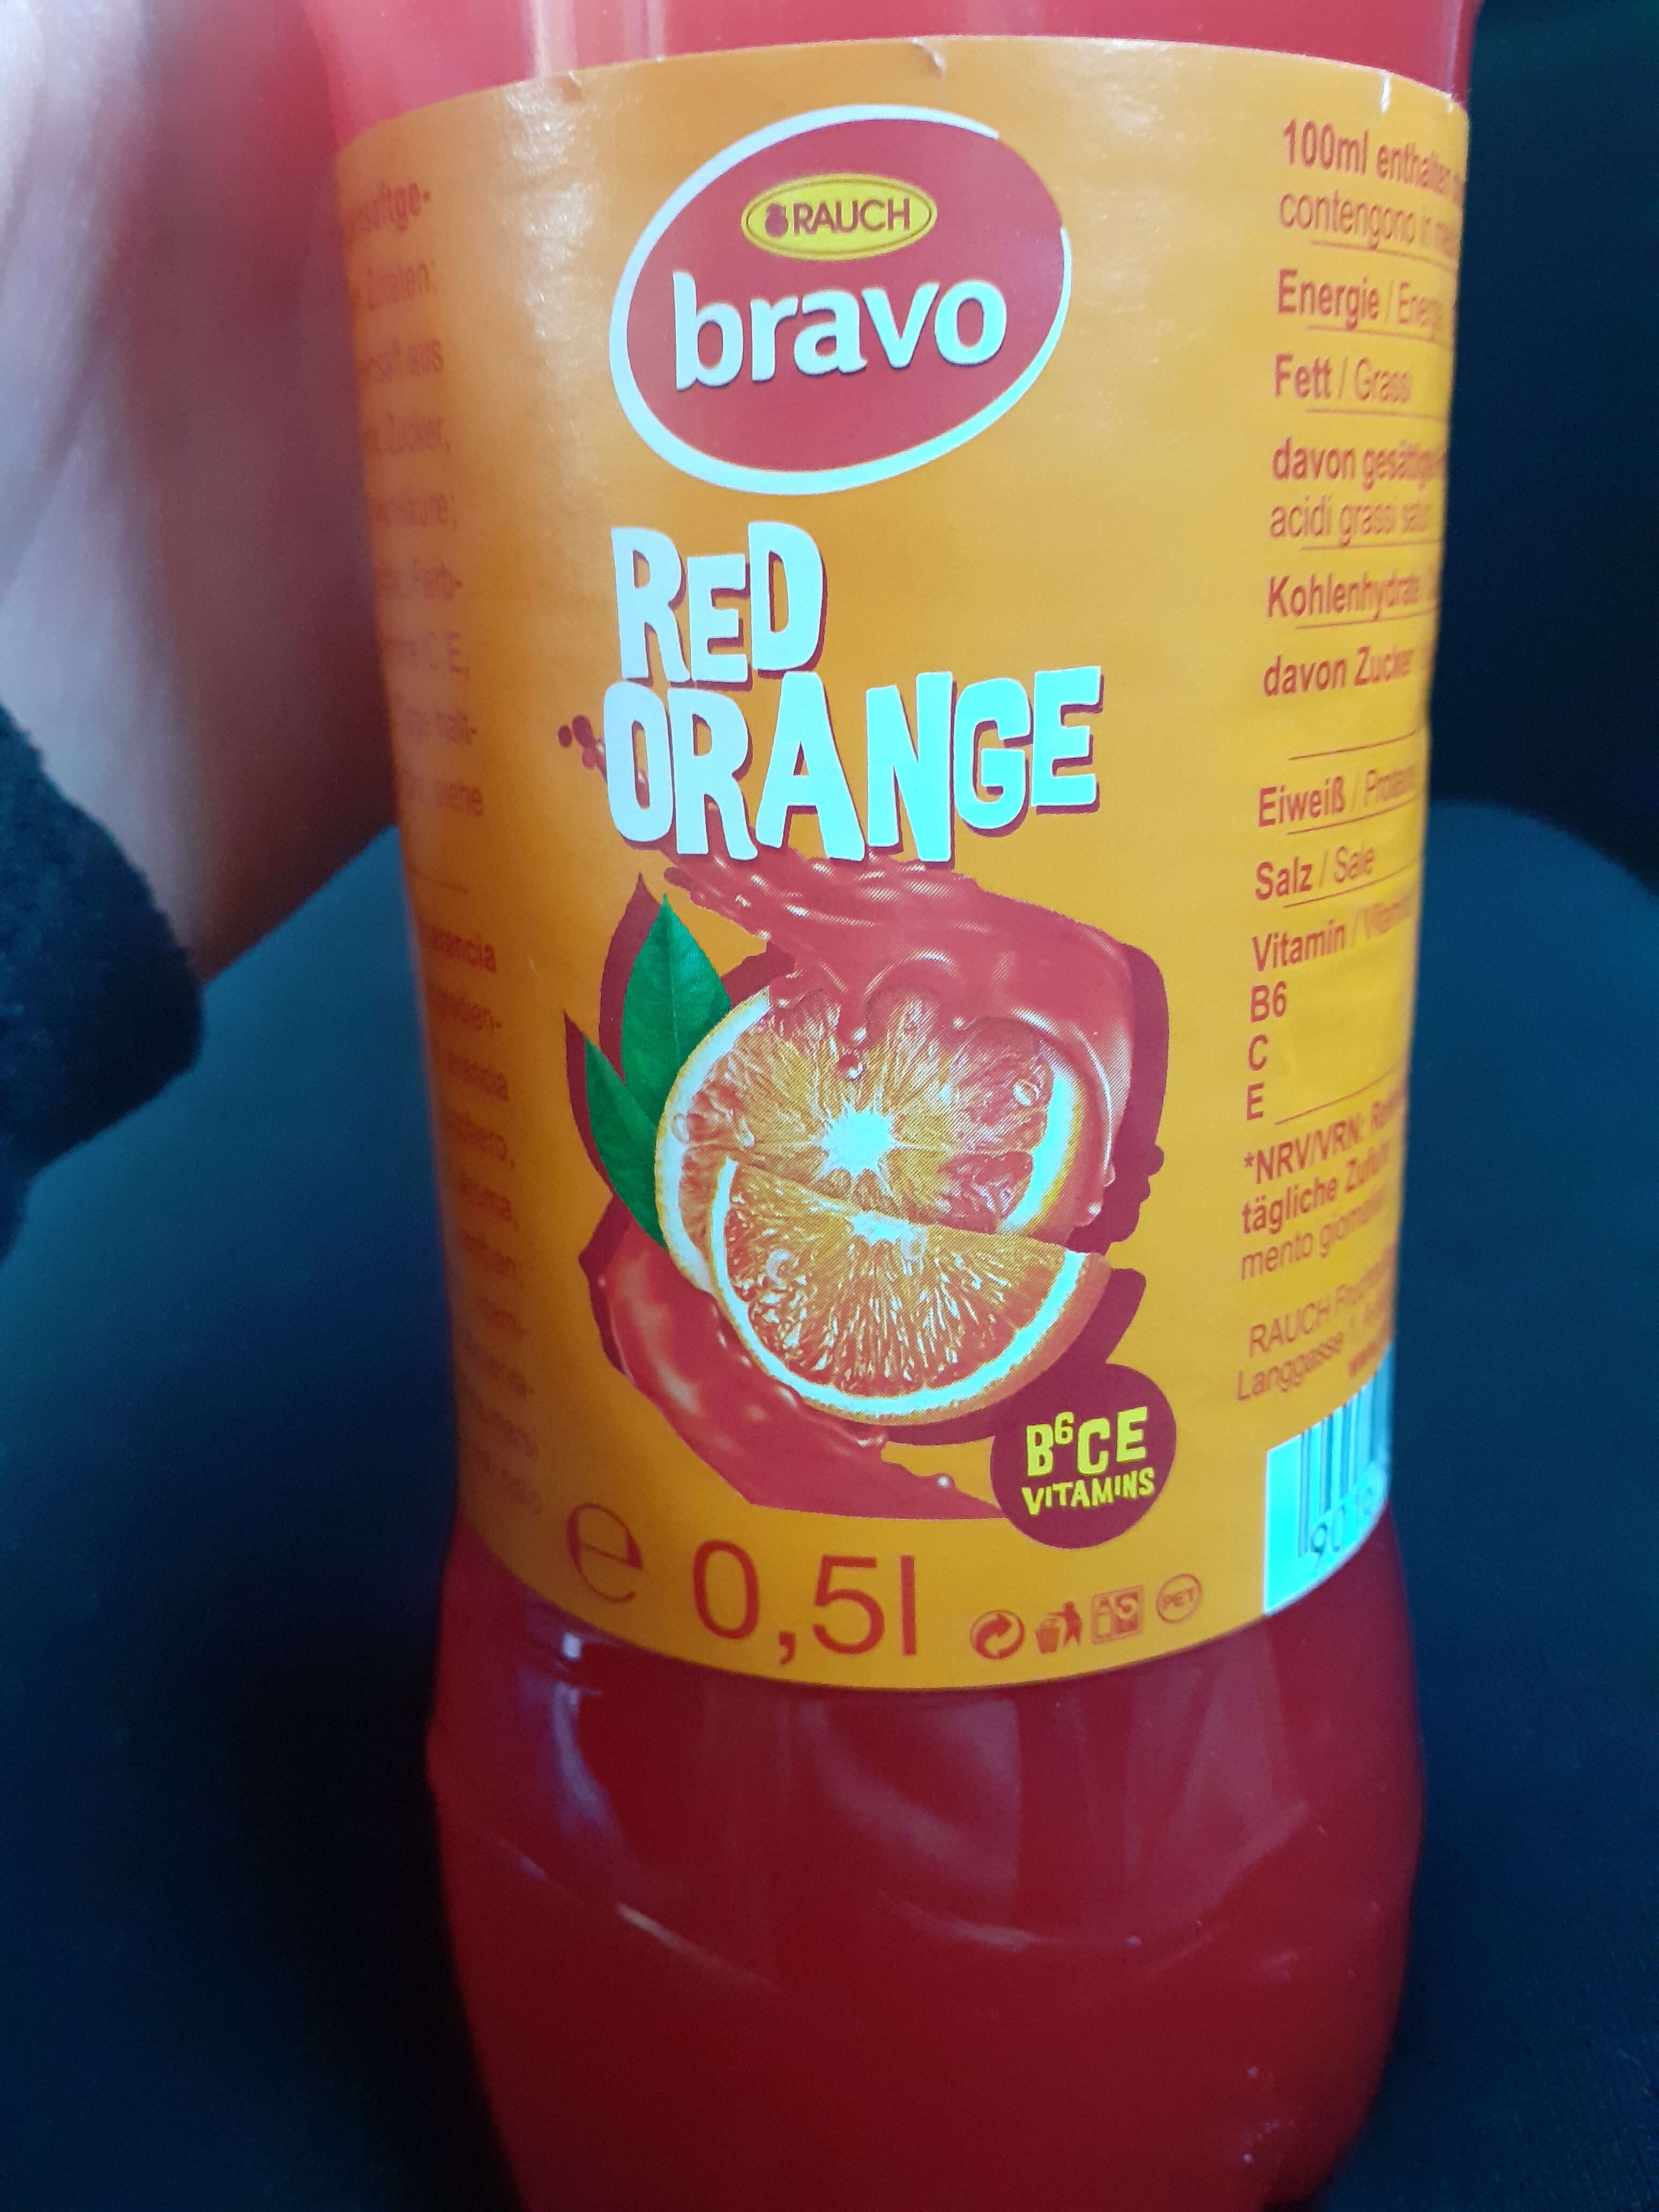 bravo Red orange - Product - en